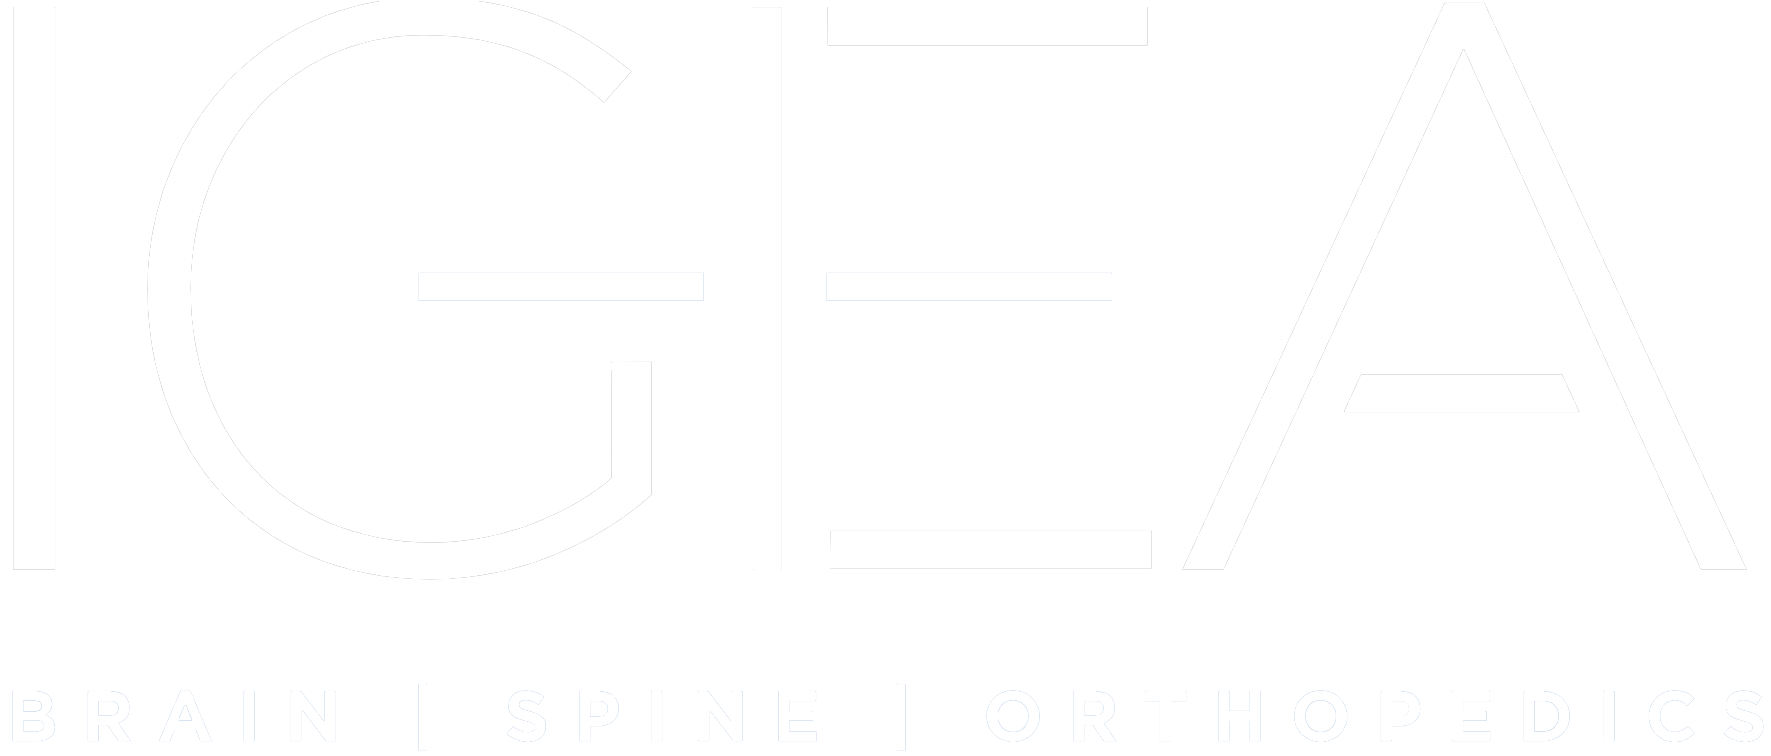 IGEA Brain, Spine and Orthopedics in NJ and NY Logo